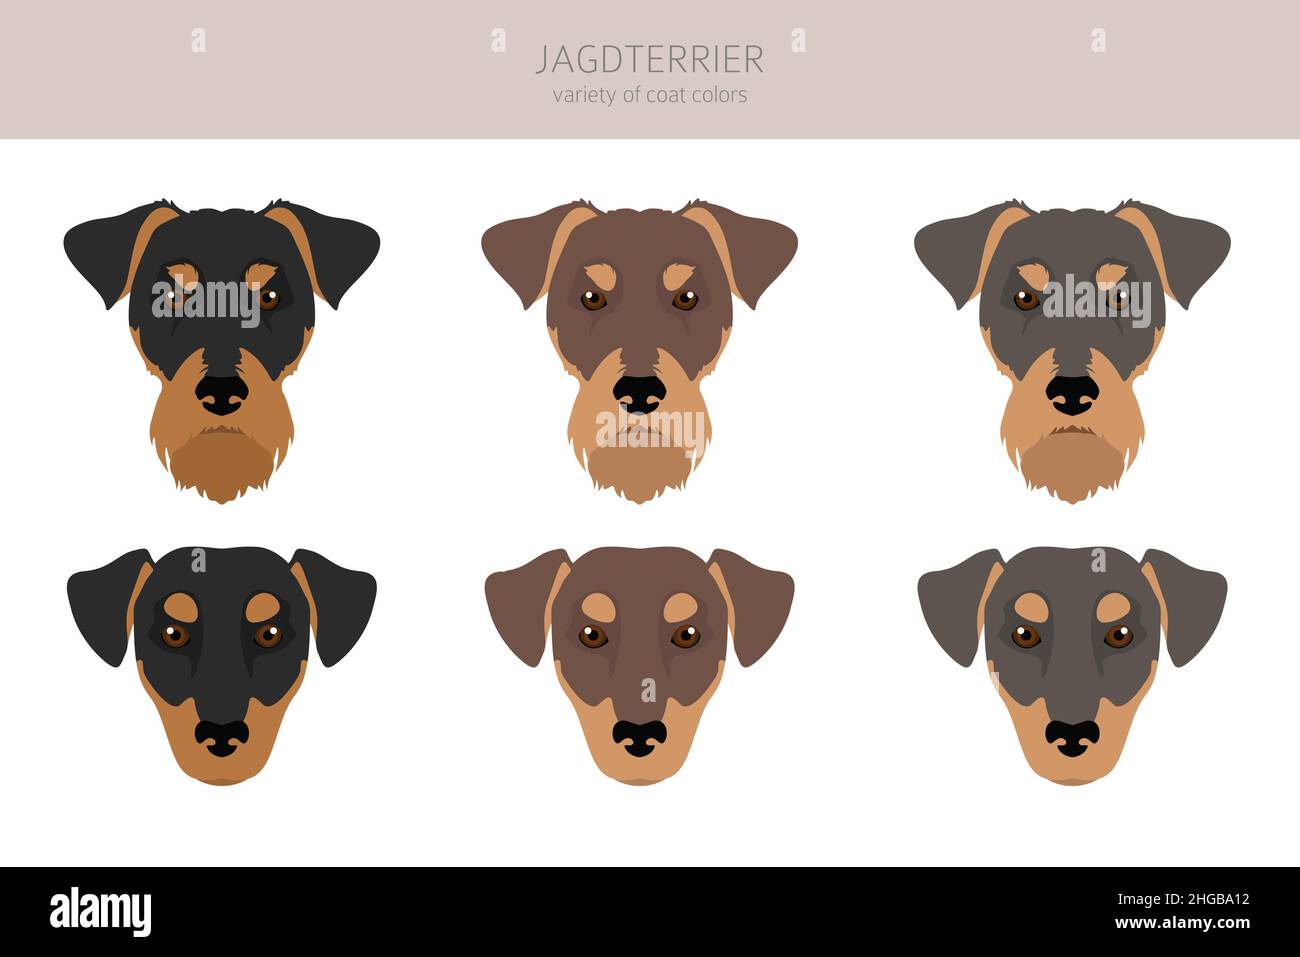 Jagdterrier clipart. Different poses, coat colors set.  Vector illustration Stock Vector